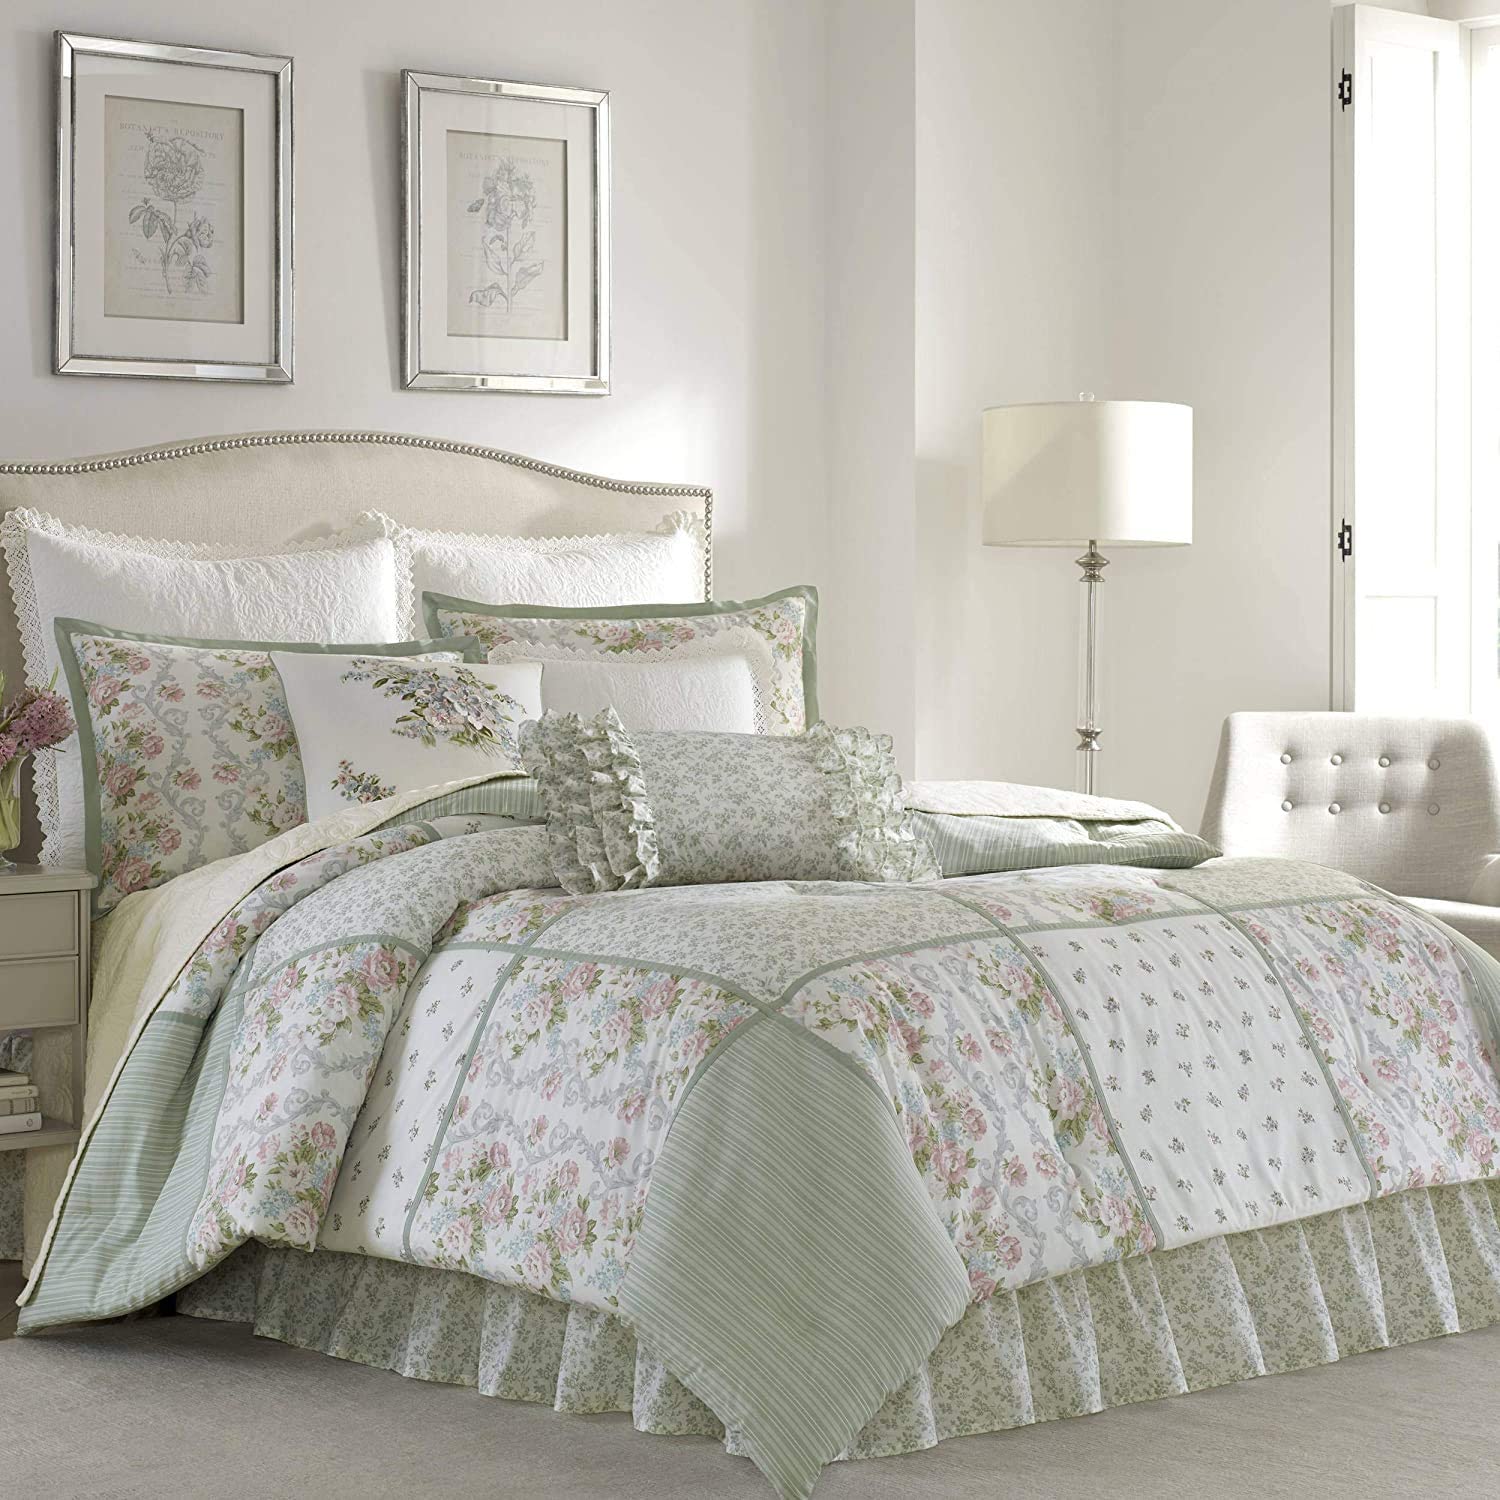 Laura Ashley Home Harper Collection Luxury Ultra Soft Comforter All Season Ebay 